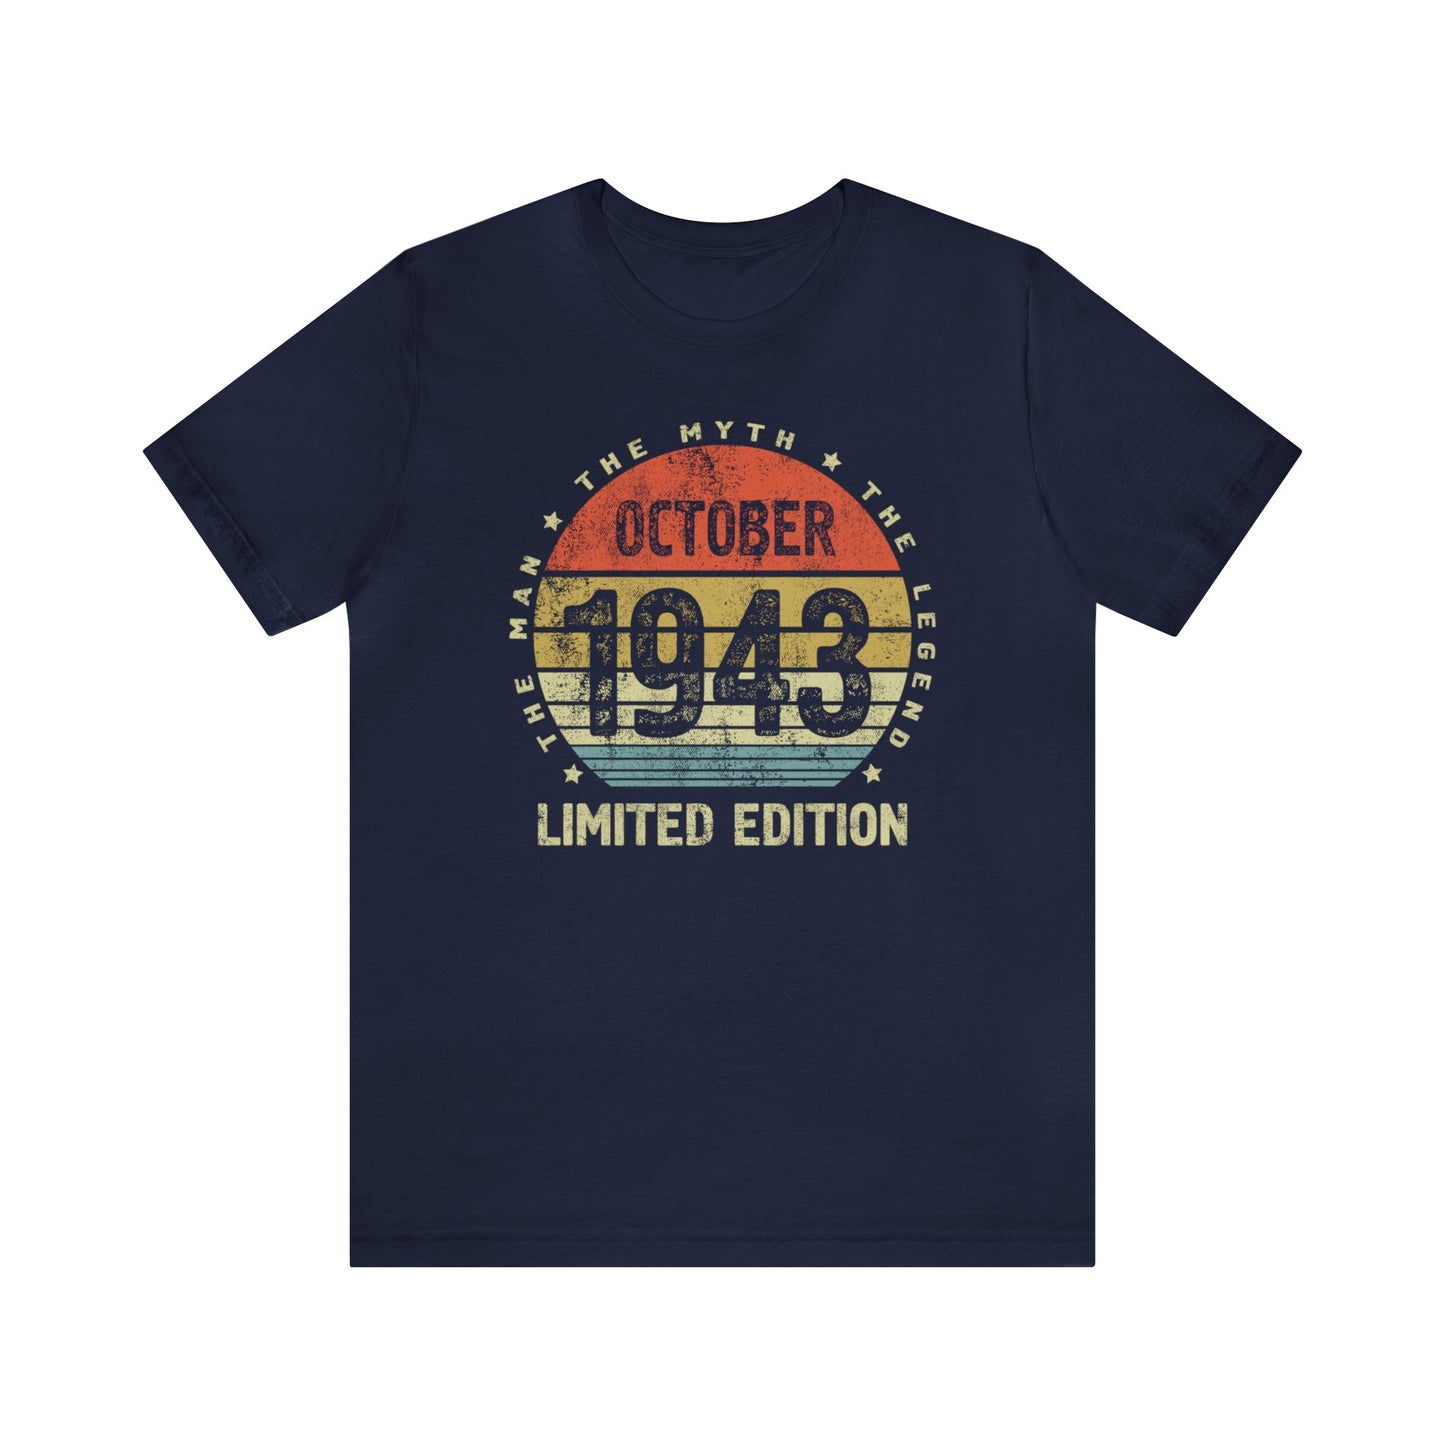 90th birthday gift shirt for men October 1933 birthday gift for husband 90th anniversary Shirt